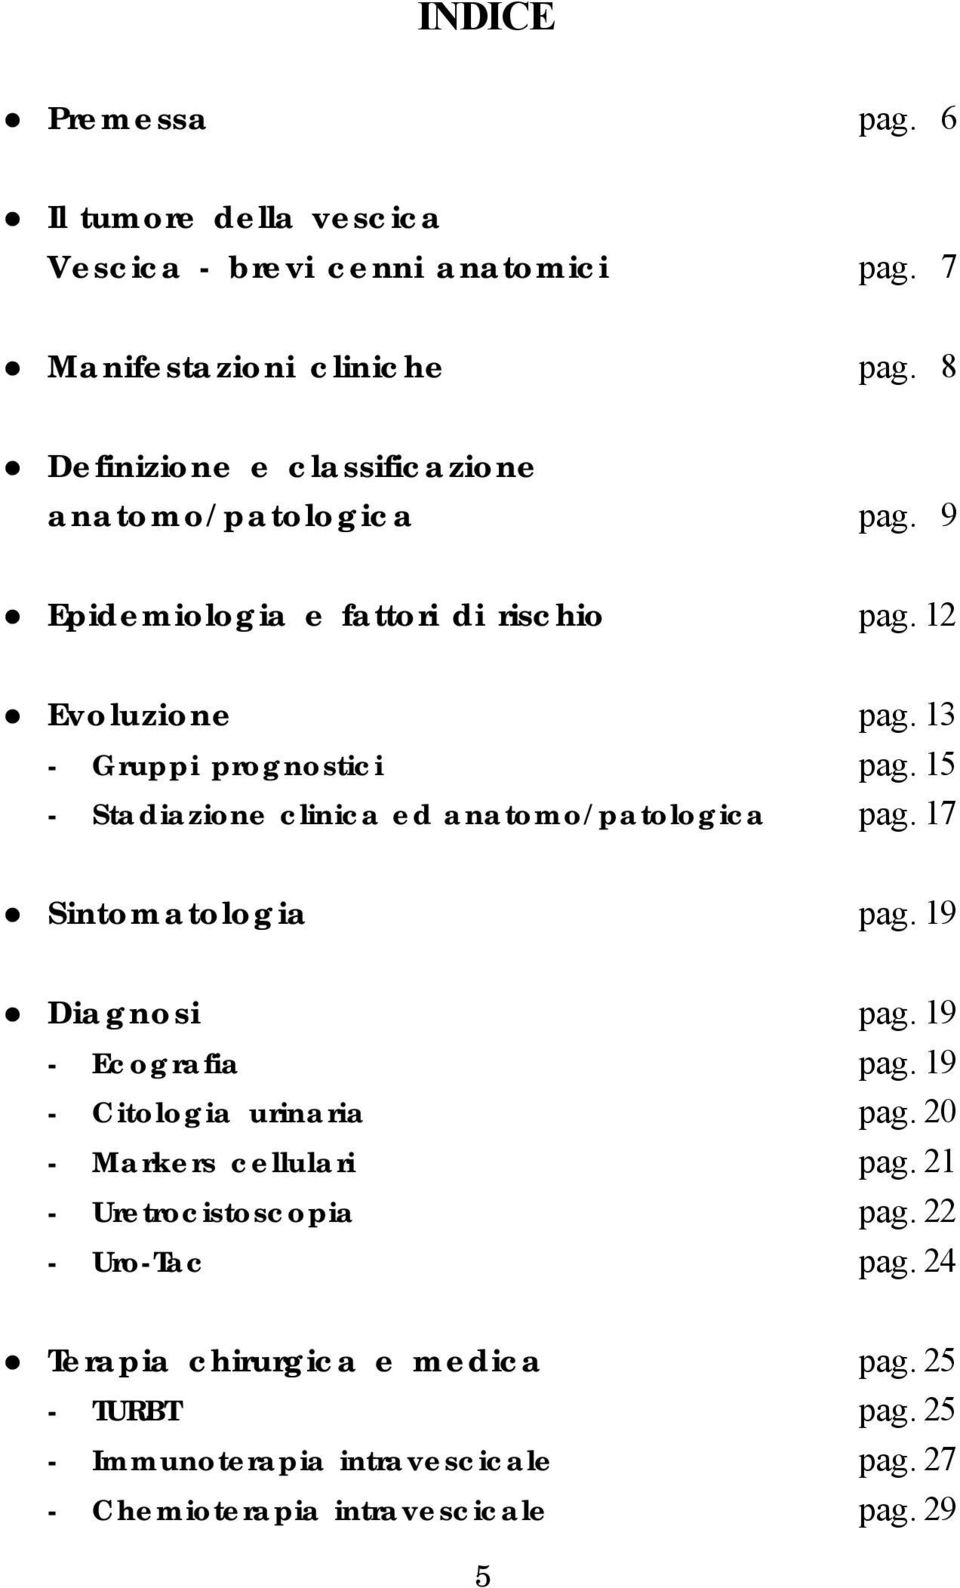 15 - Stadiazione clinica ed anatomo/patologica pag. 17 Sintomatologia pag. 19 Diagnosi pag. 19 - Ecografia pag. 19 - Citologia urinaria pag.